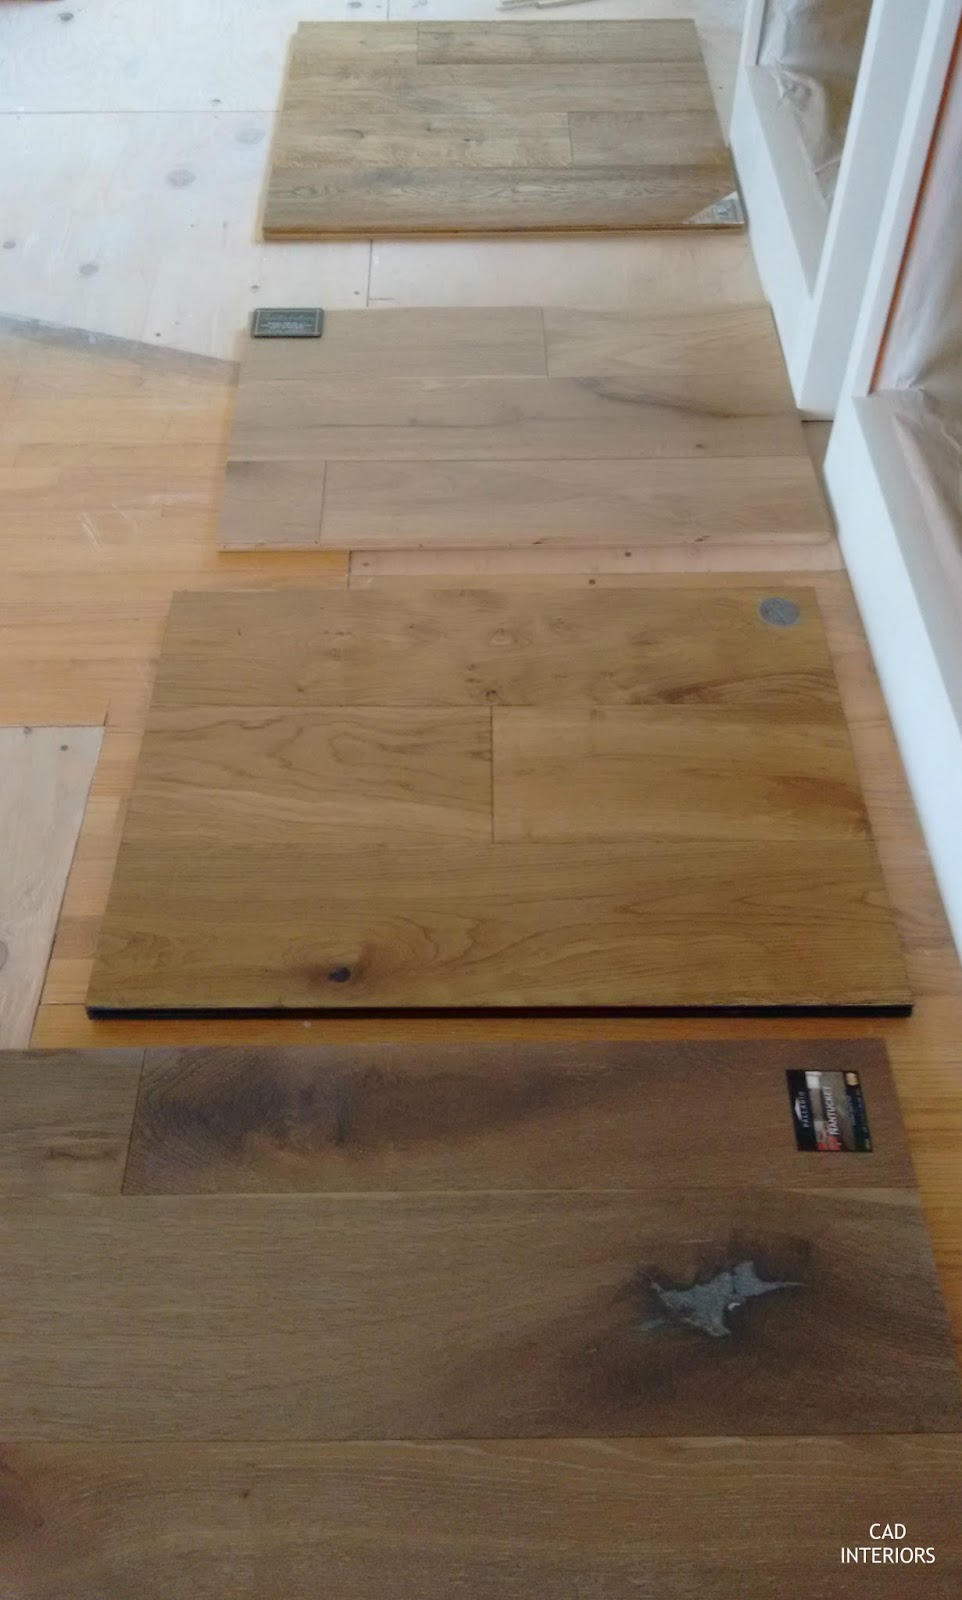 CAD INTERIORS home renovation hardwood flooring European oak wide planks